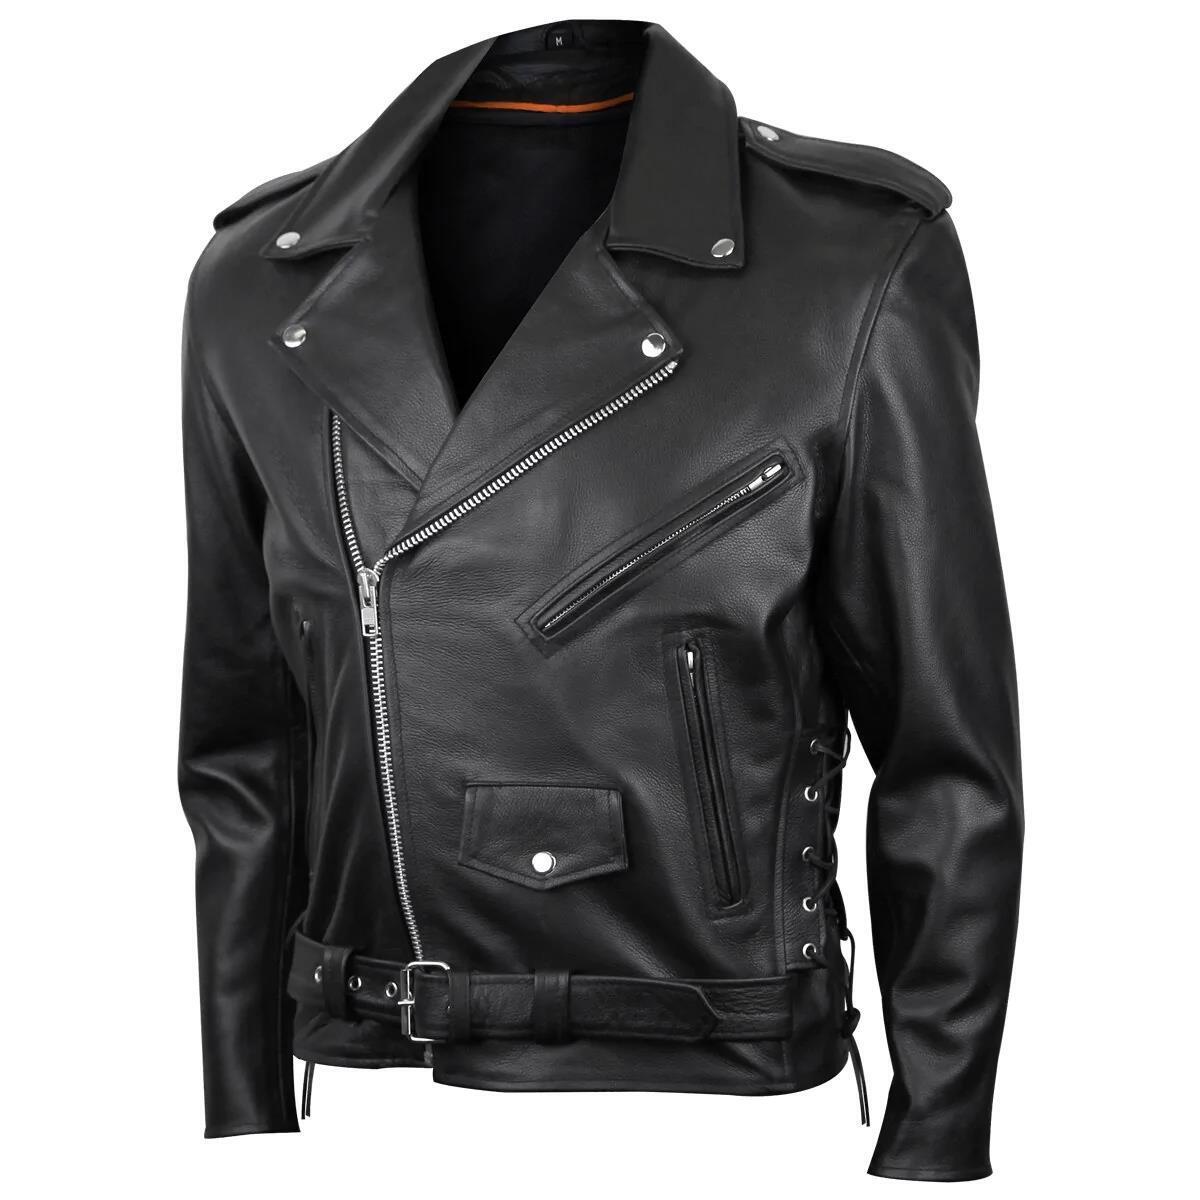 Vance Leather VL515 TG Premium Leather Classic MC Jacket